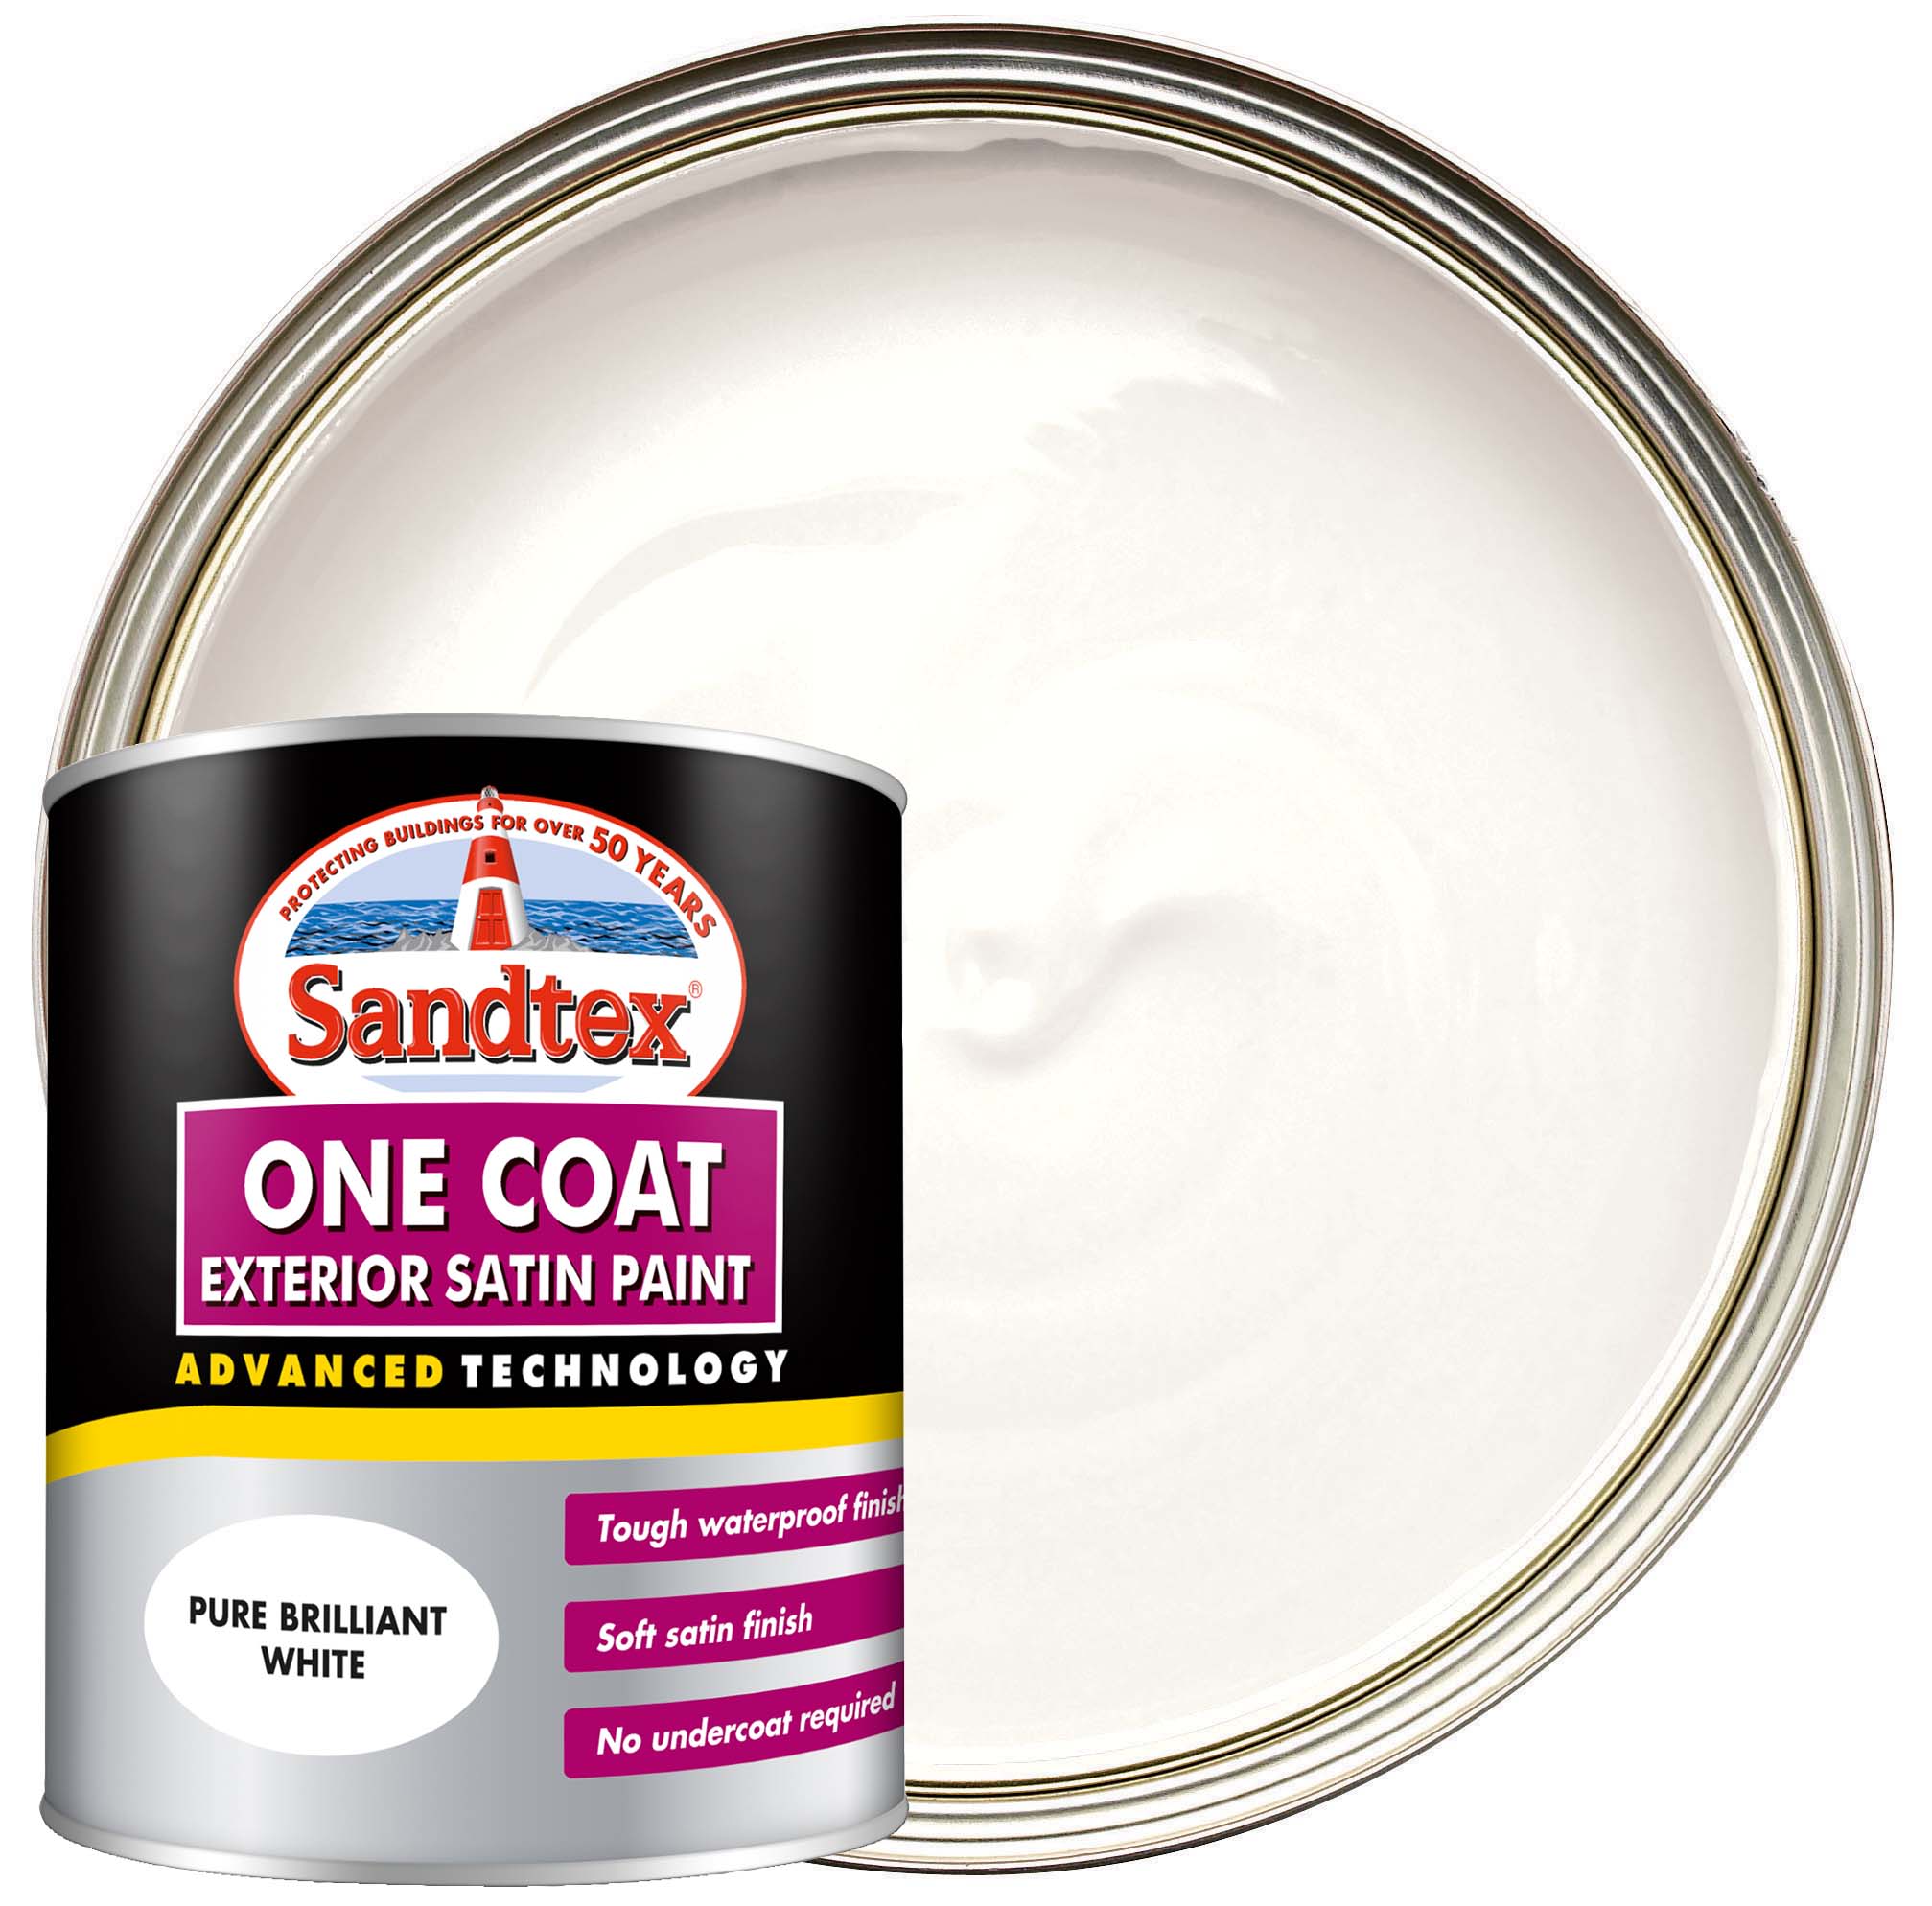 Sandtex One Coat Exterior Satin Paint - Pure